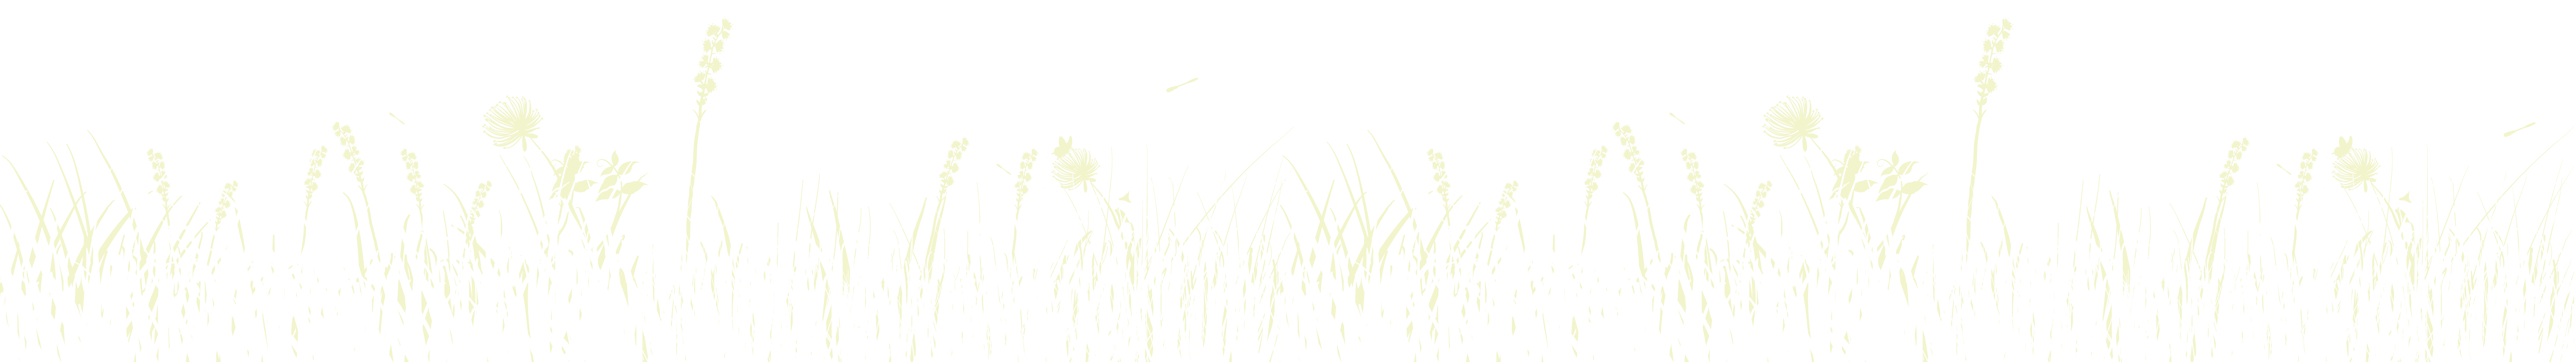 Bubolz white grass background_01